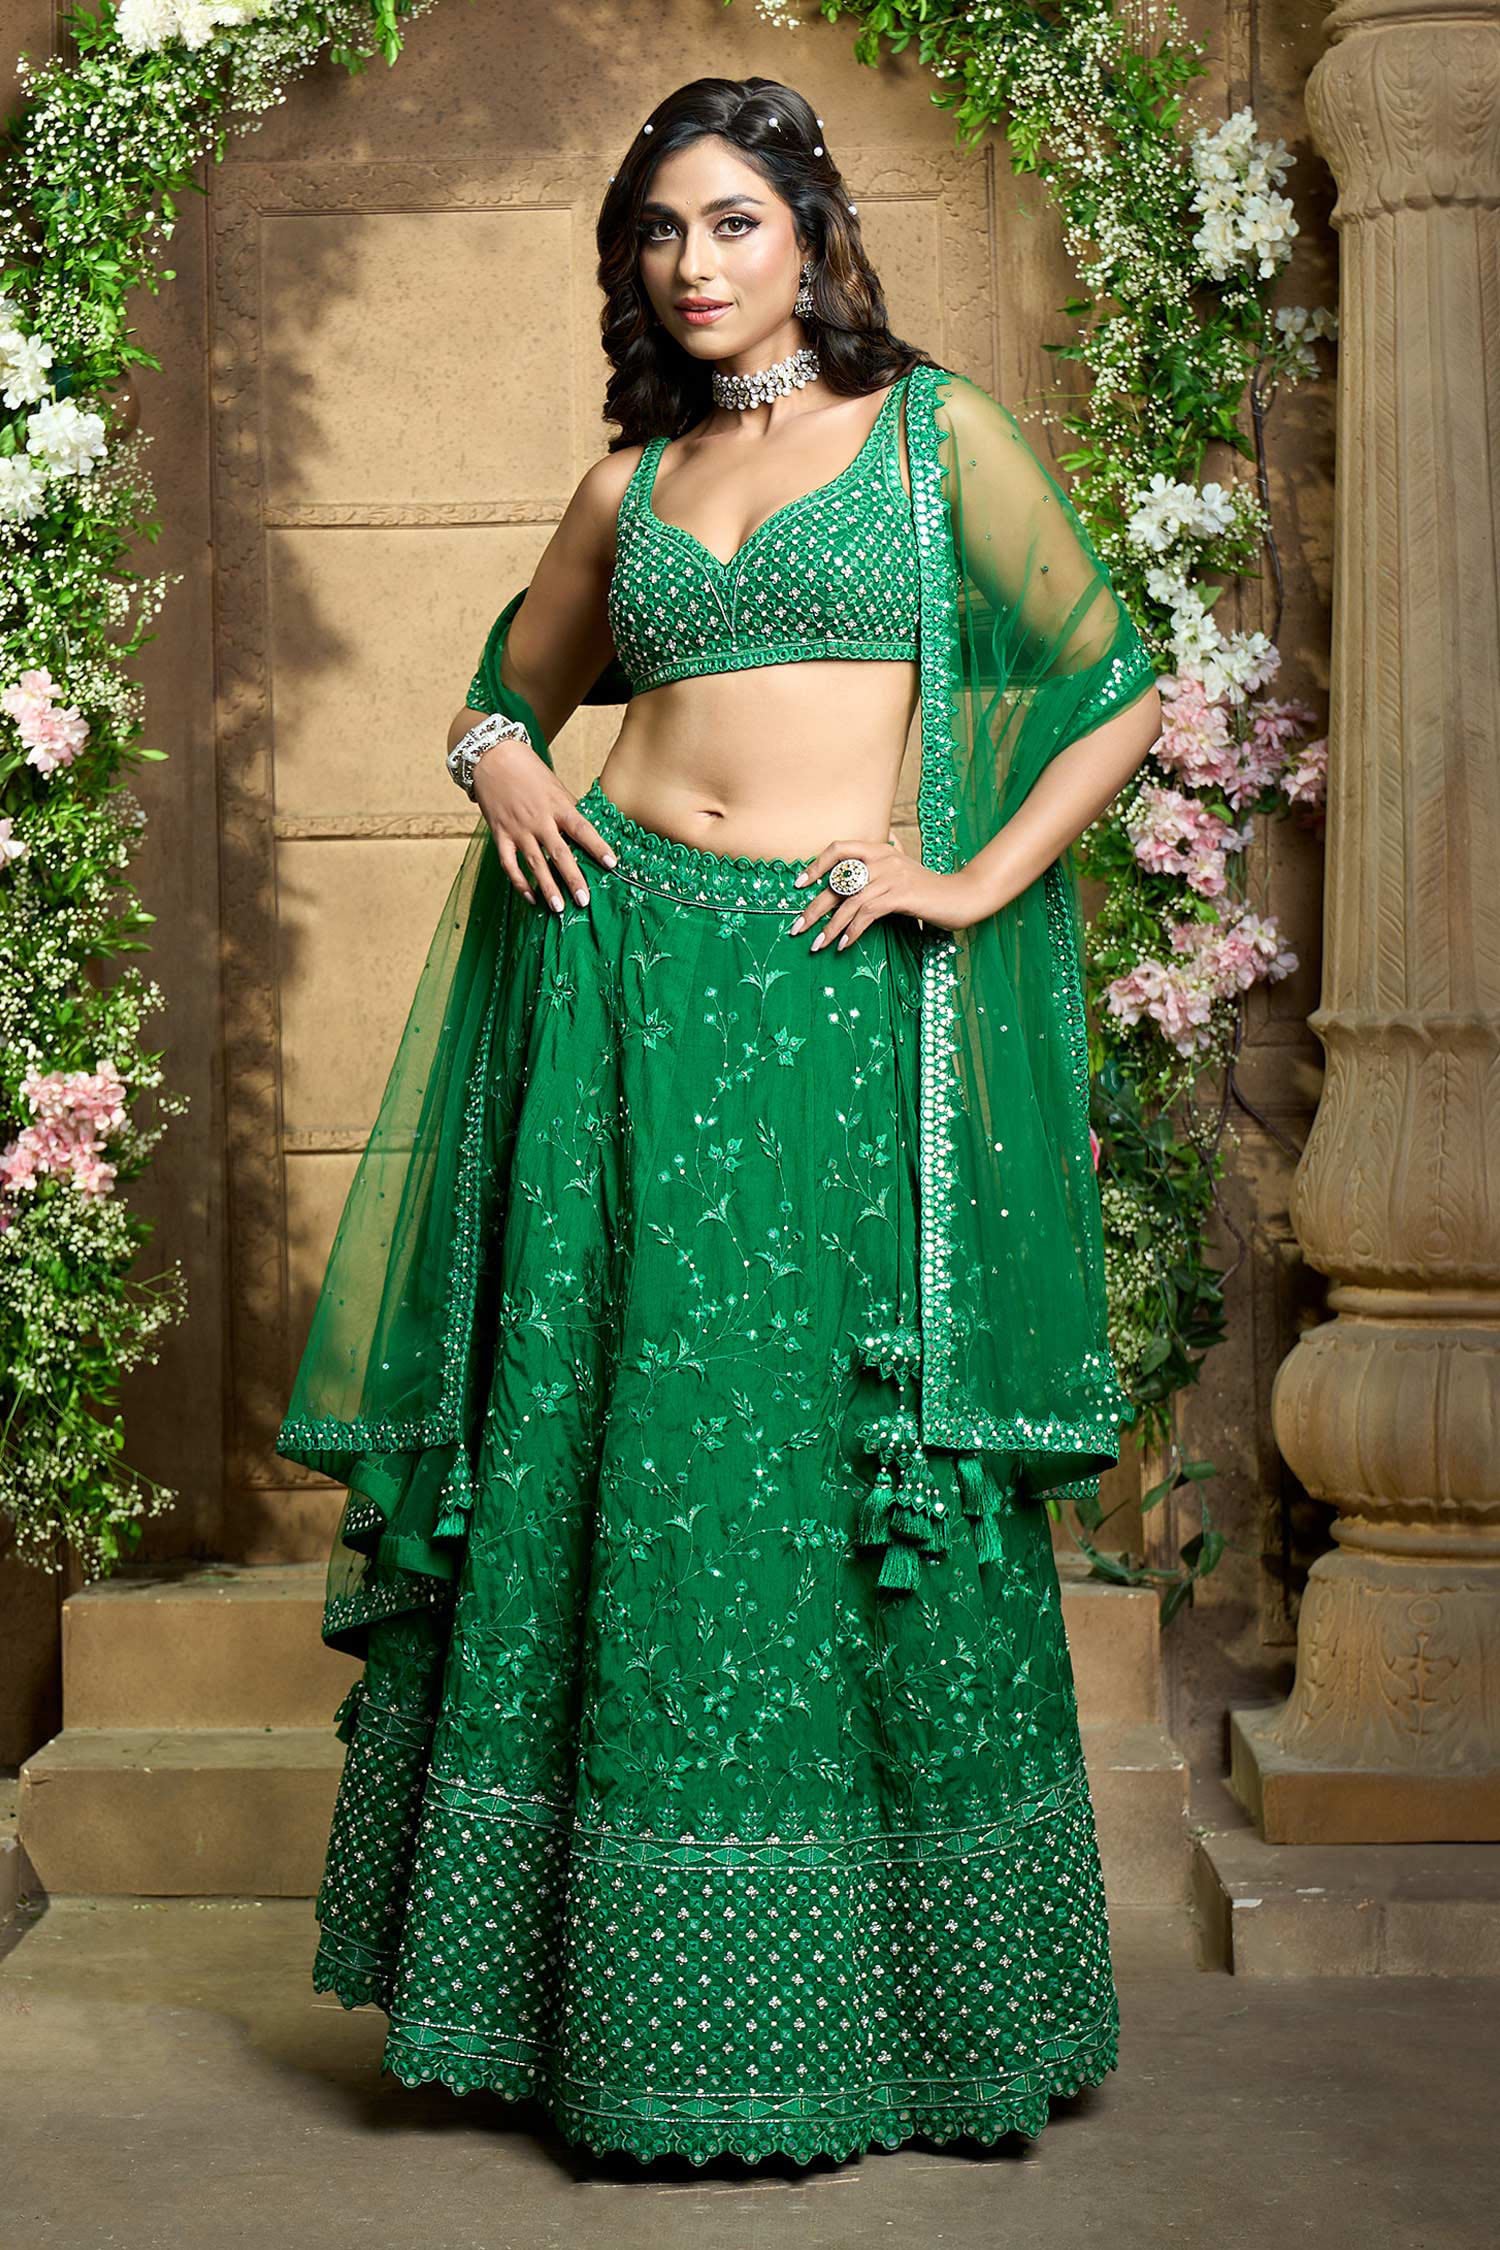 Alia Bhatt's Style Will Help You Get Your Wedding Wardrobe Sorted